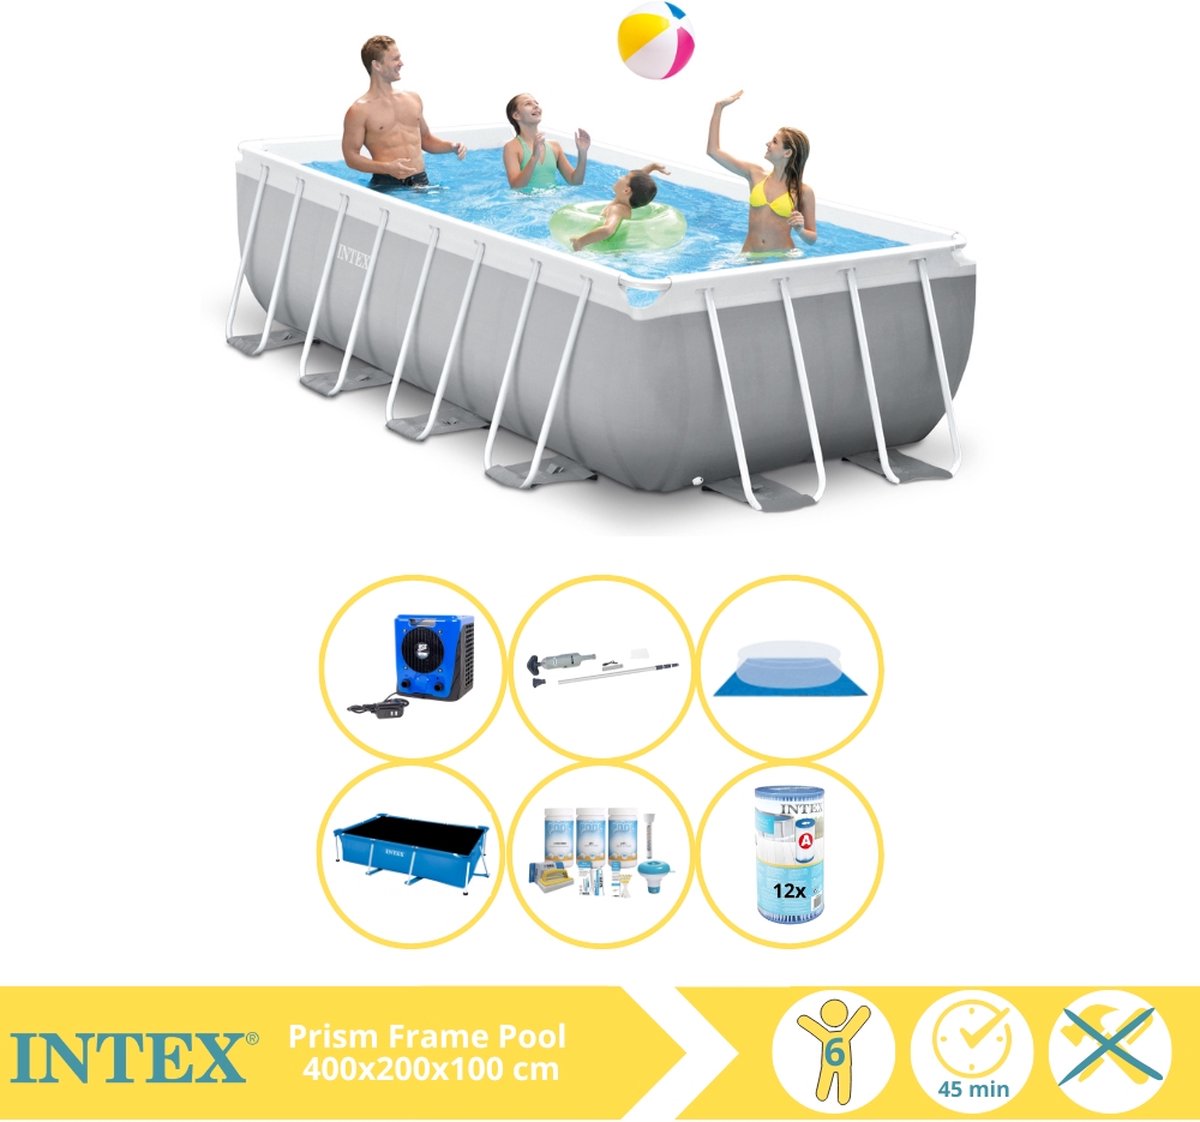 Intex Prism Frame Zwembad - Opzetzwembad - 400x200x100 cm - Inclusief Solarzeil Pro, Onderhoudspakket, Filter, Grondzeil, Stofzuiger en Warmtepomp HS